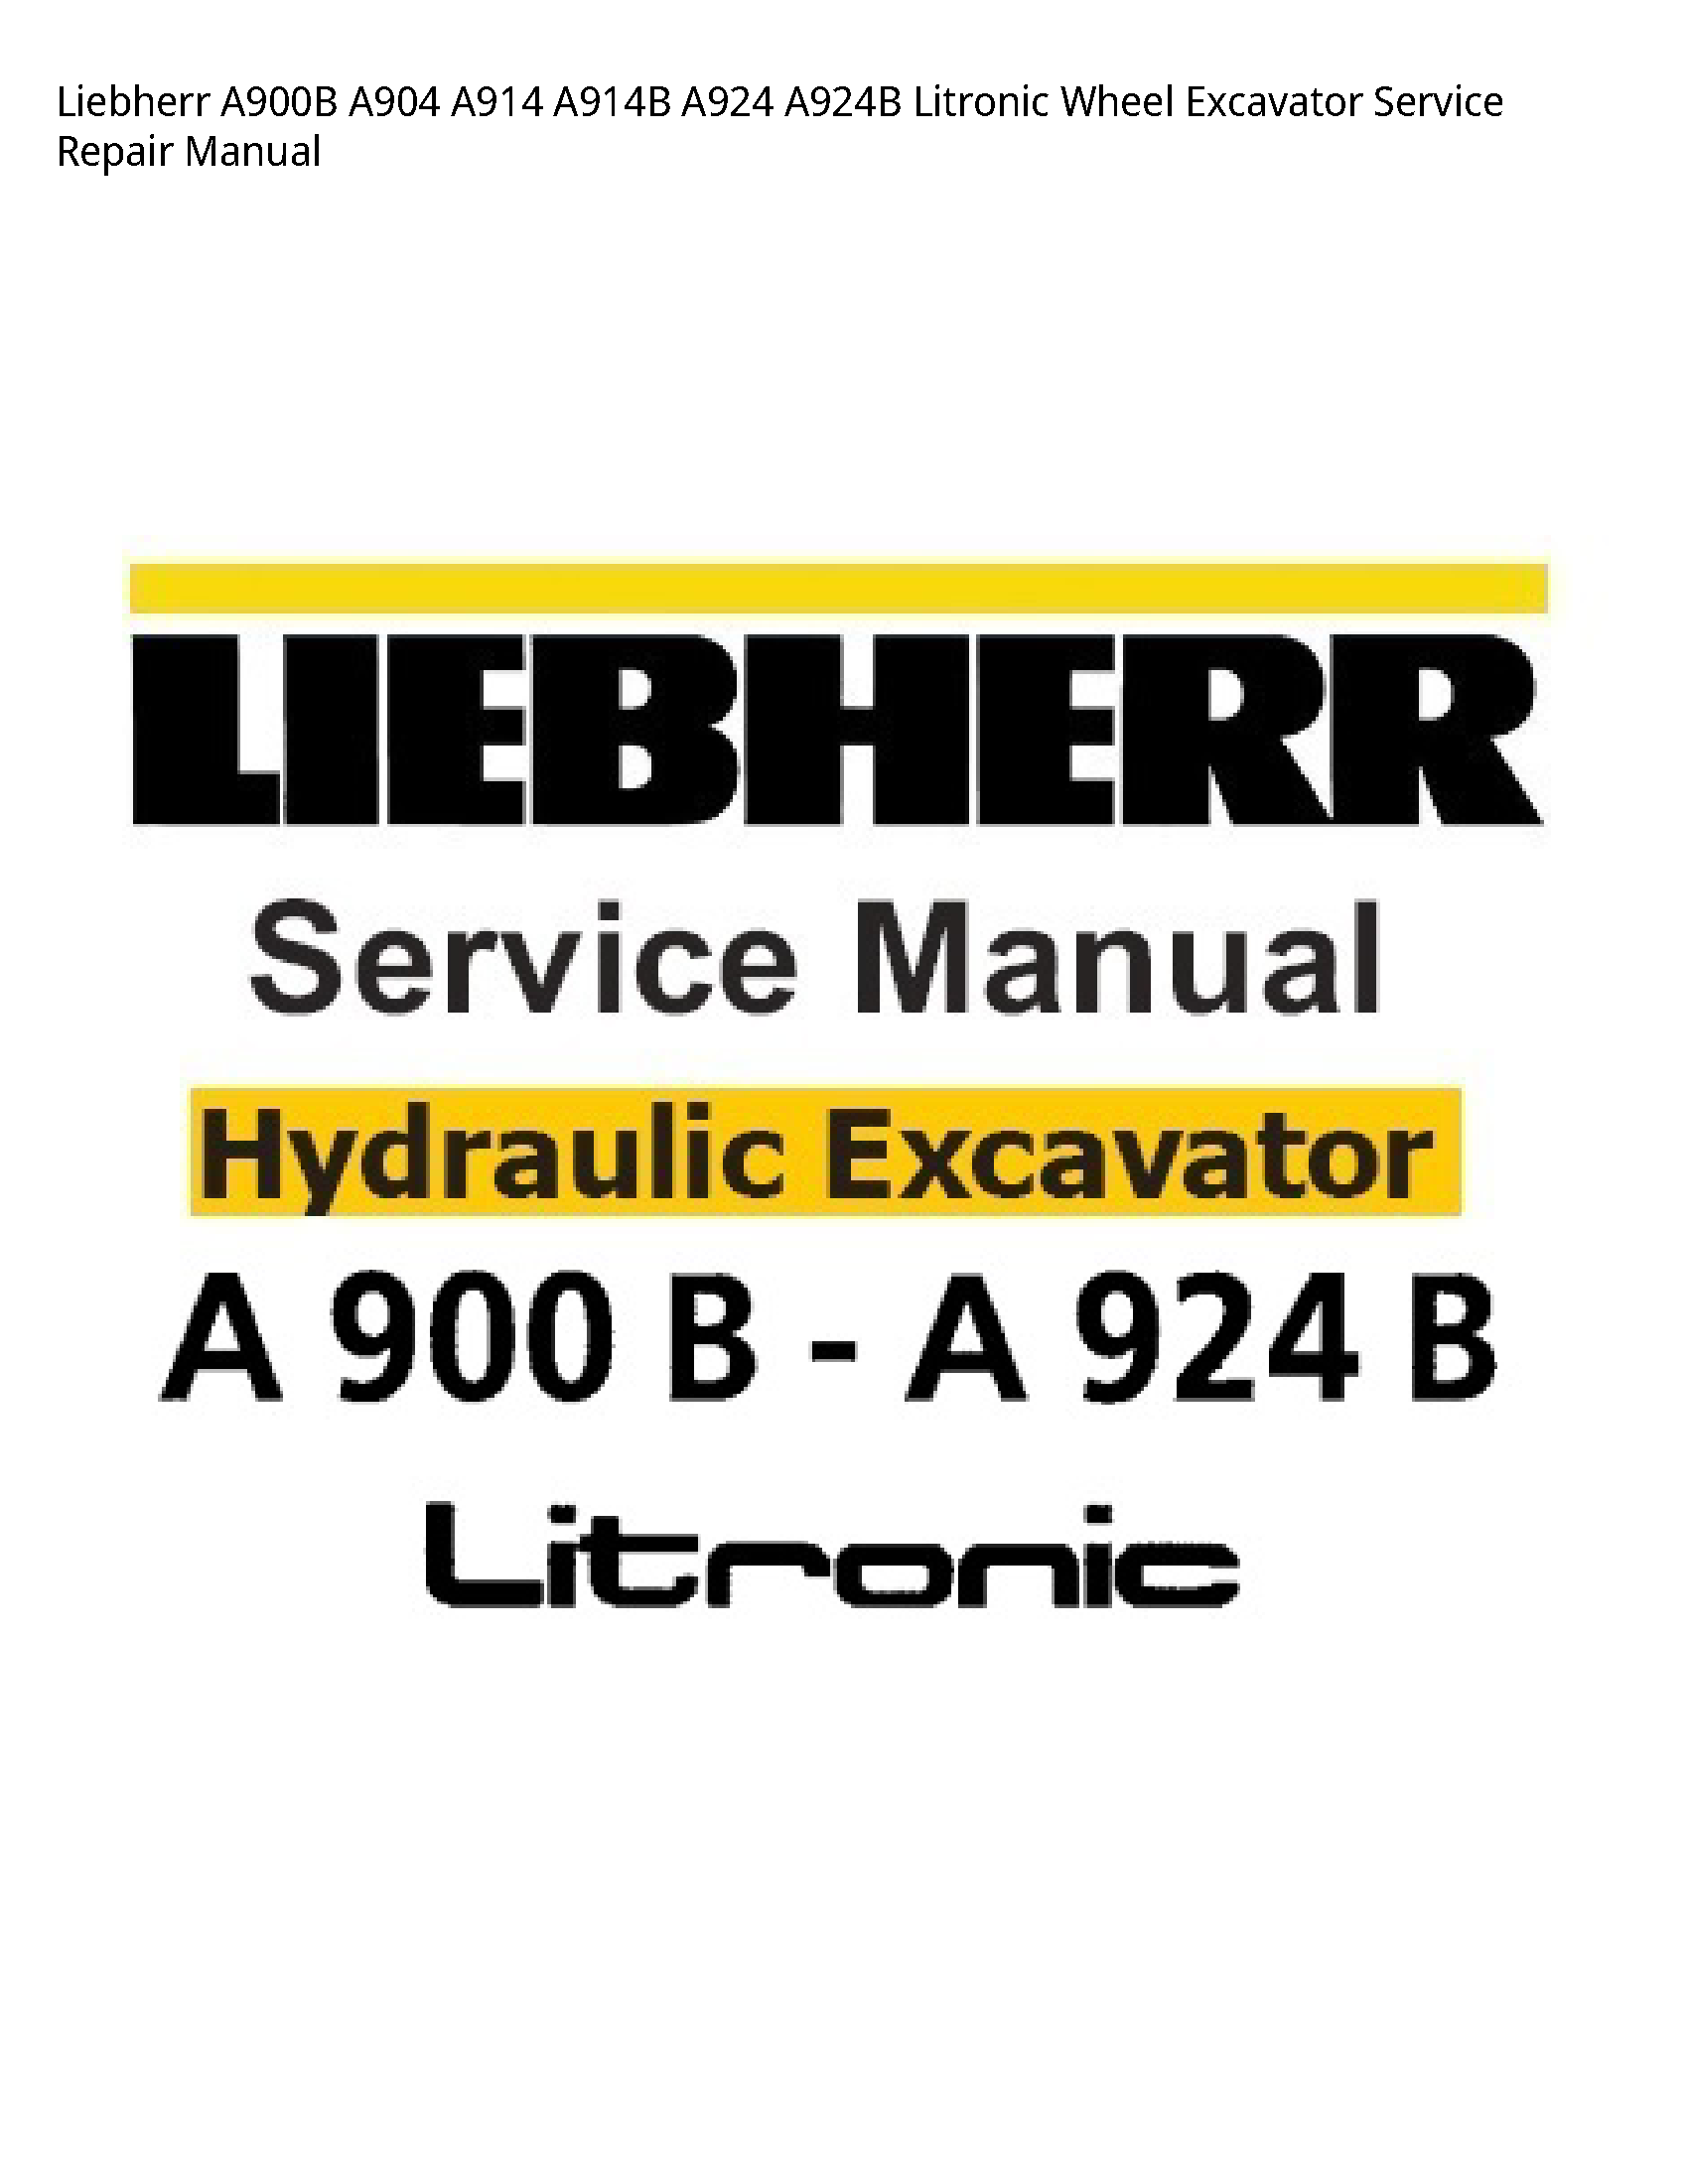 Liebherr A900B Litronic Wheel Excavator manual